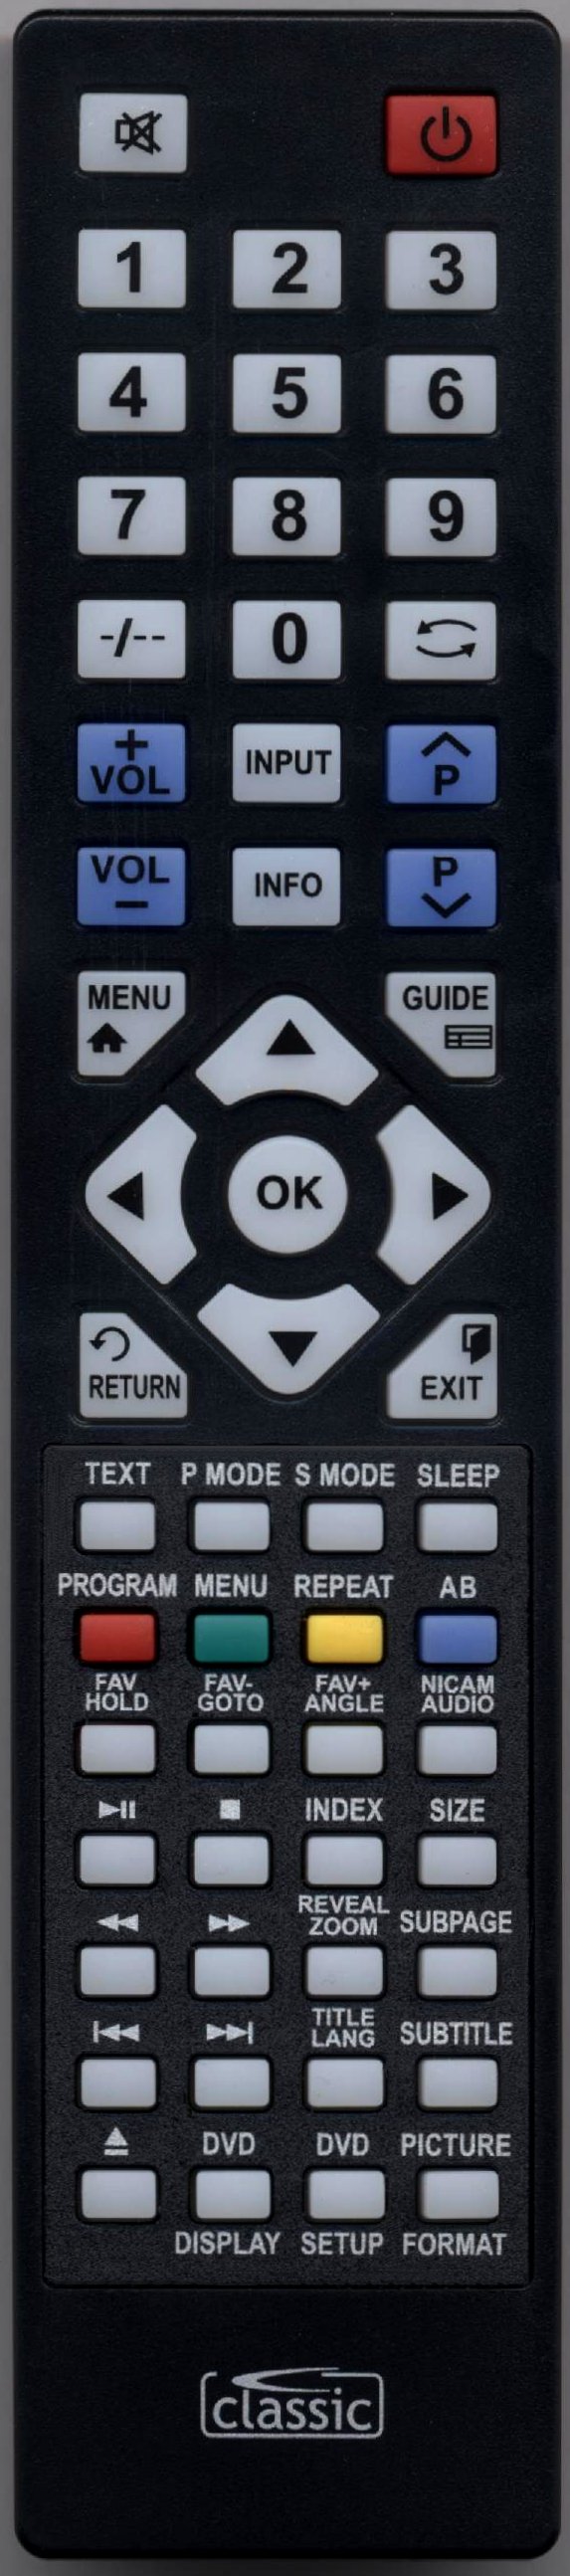 UMC X32/16-GB-TCD-UK Remote Control